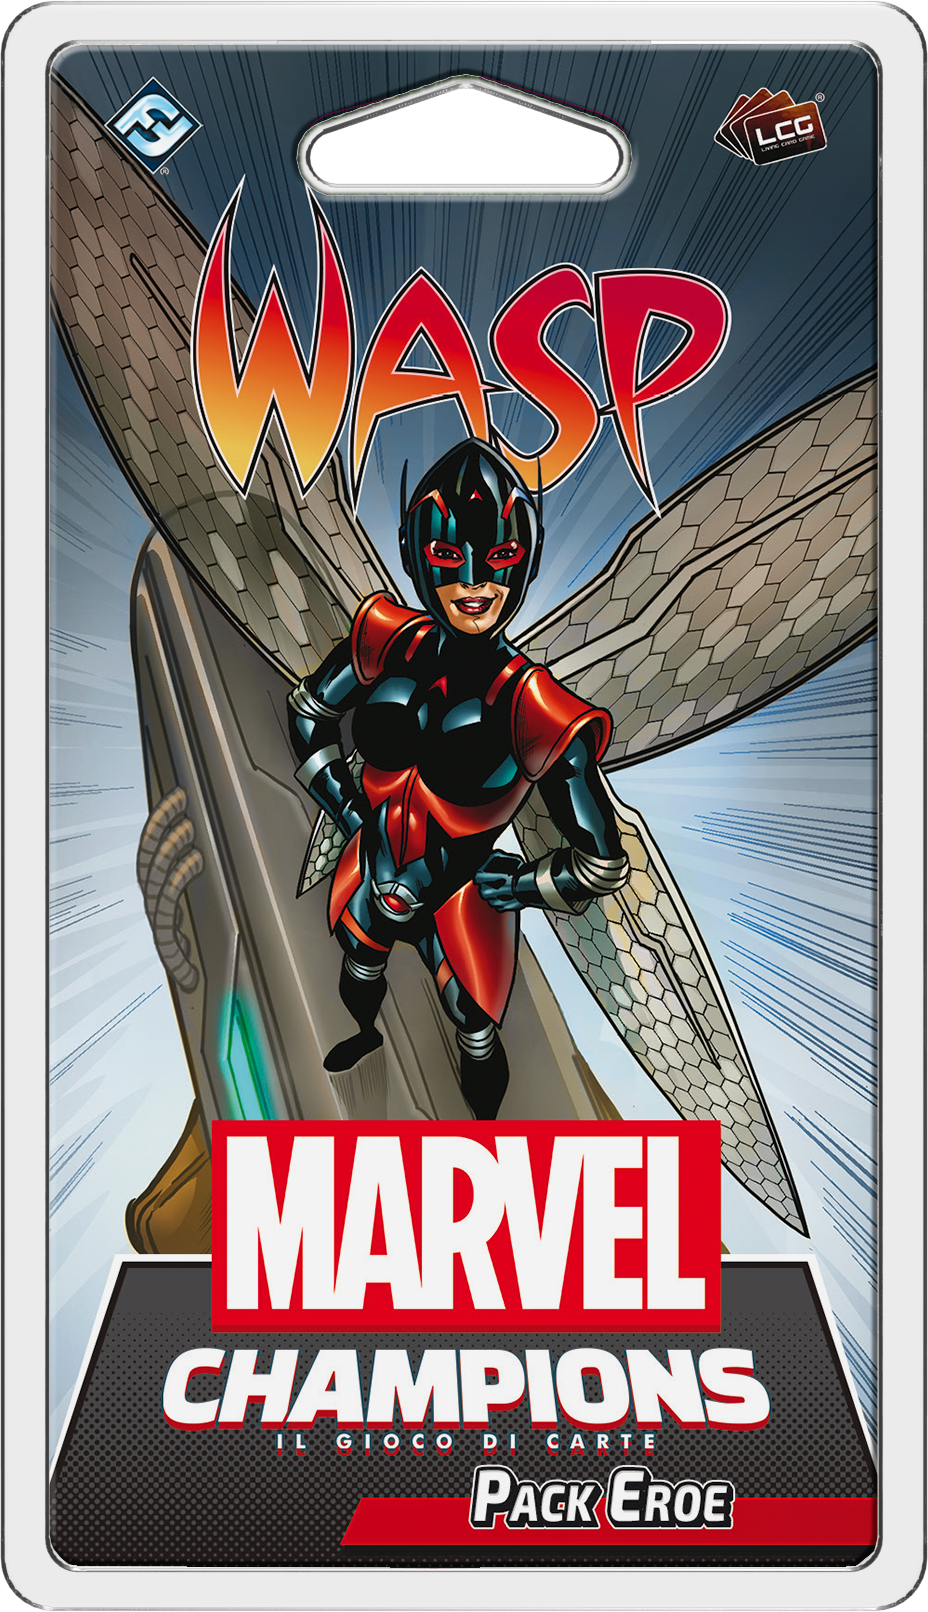 Marvel Champions LCG - Wasp